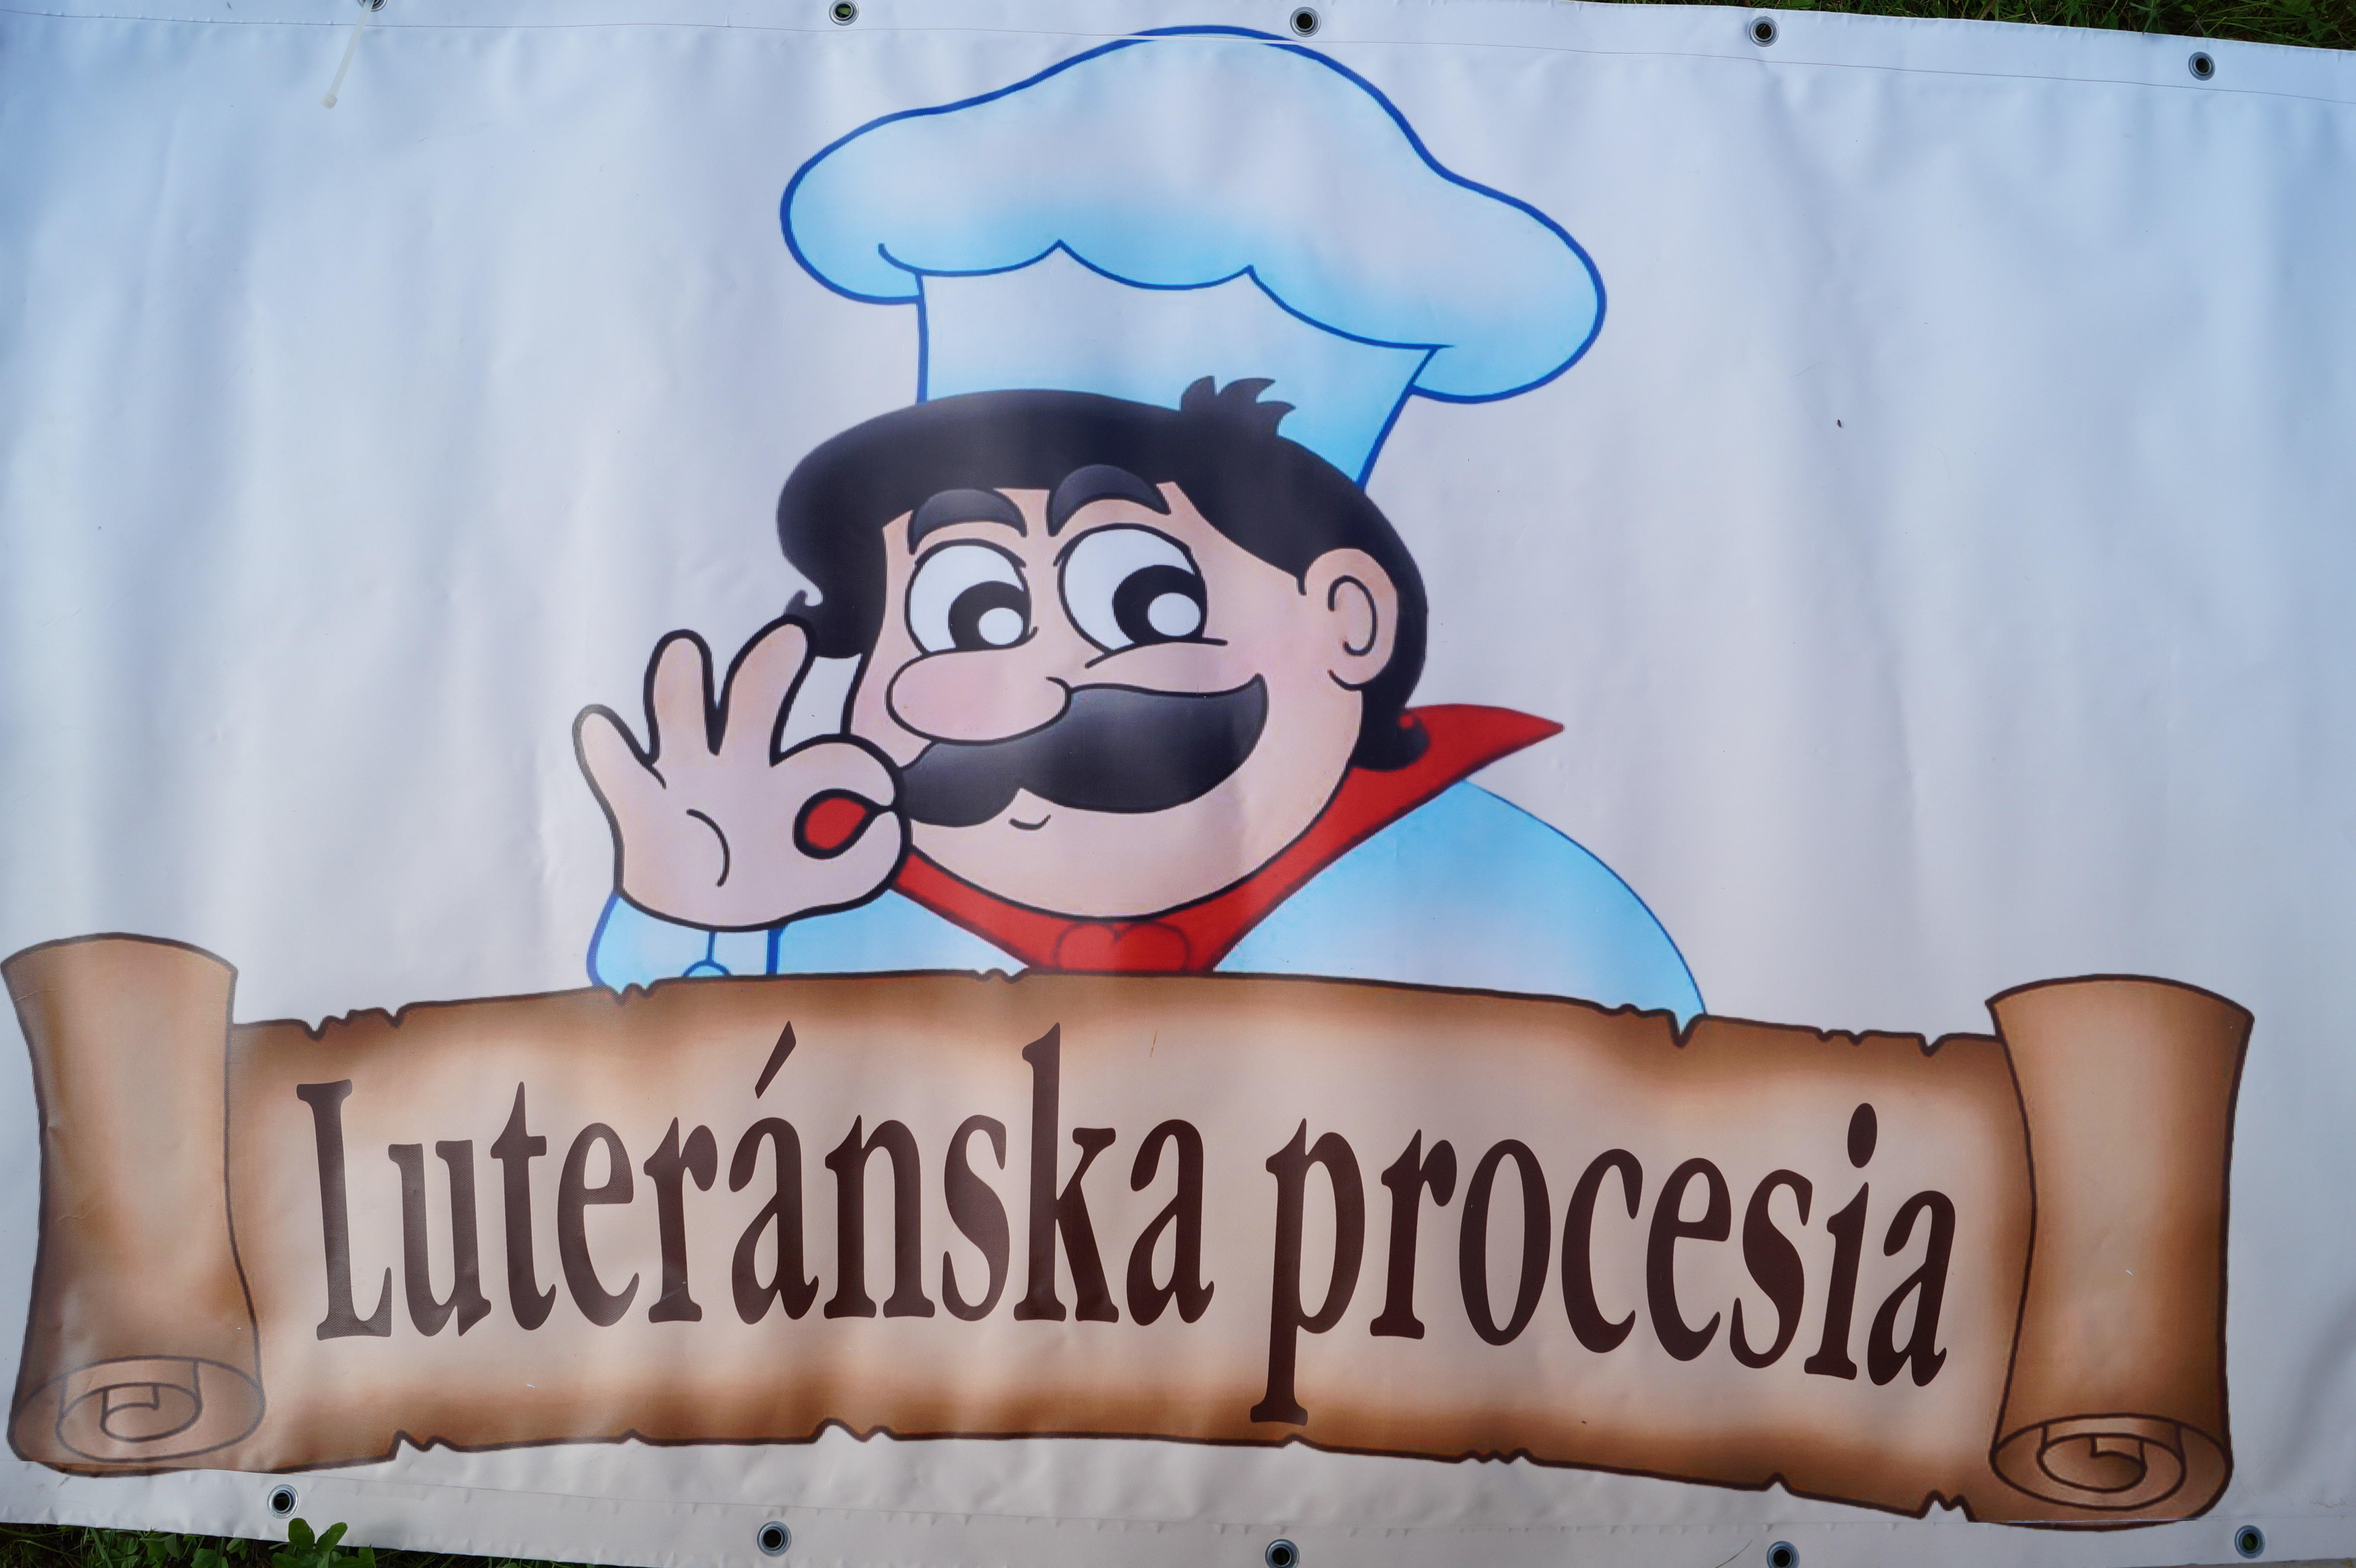 Sa vo varen Luternskej procesie Slovensk upa 2016 - 5. ronk